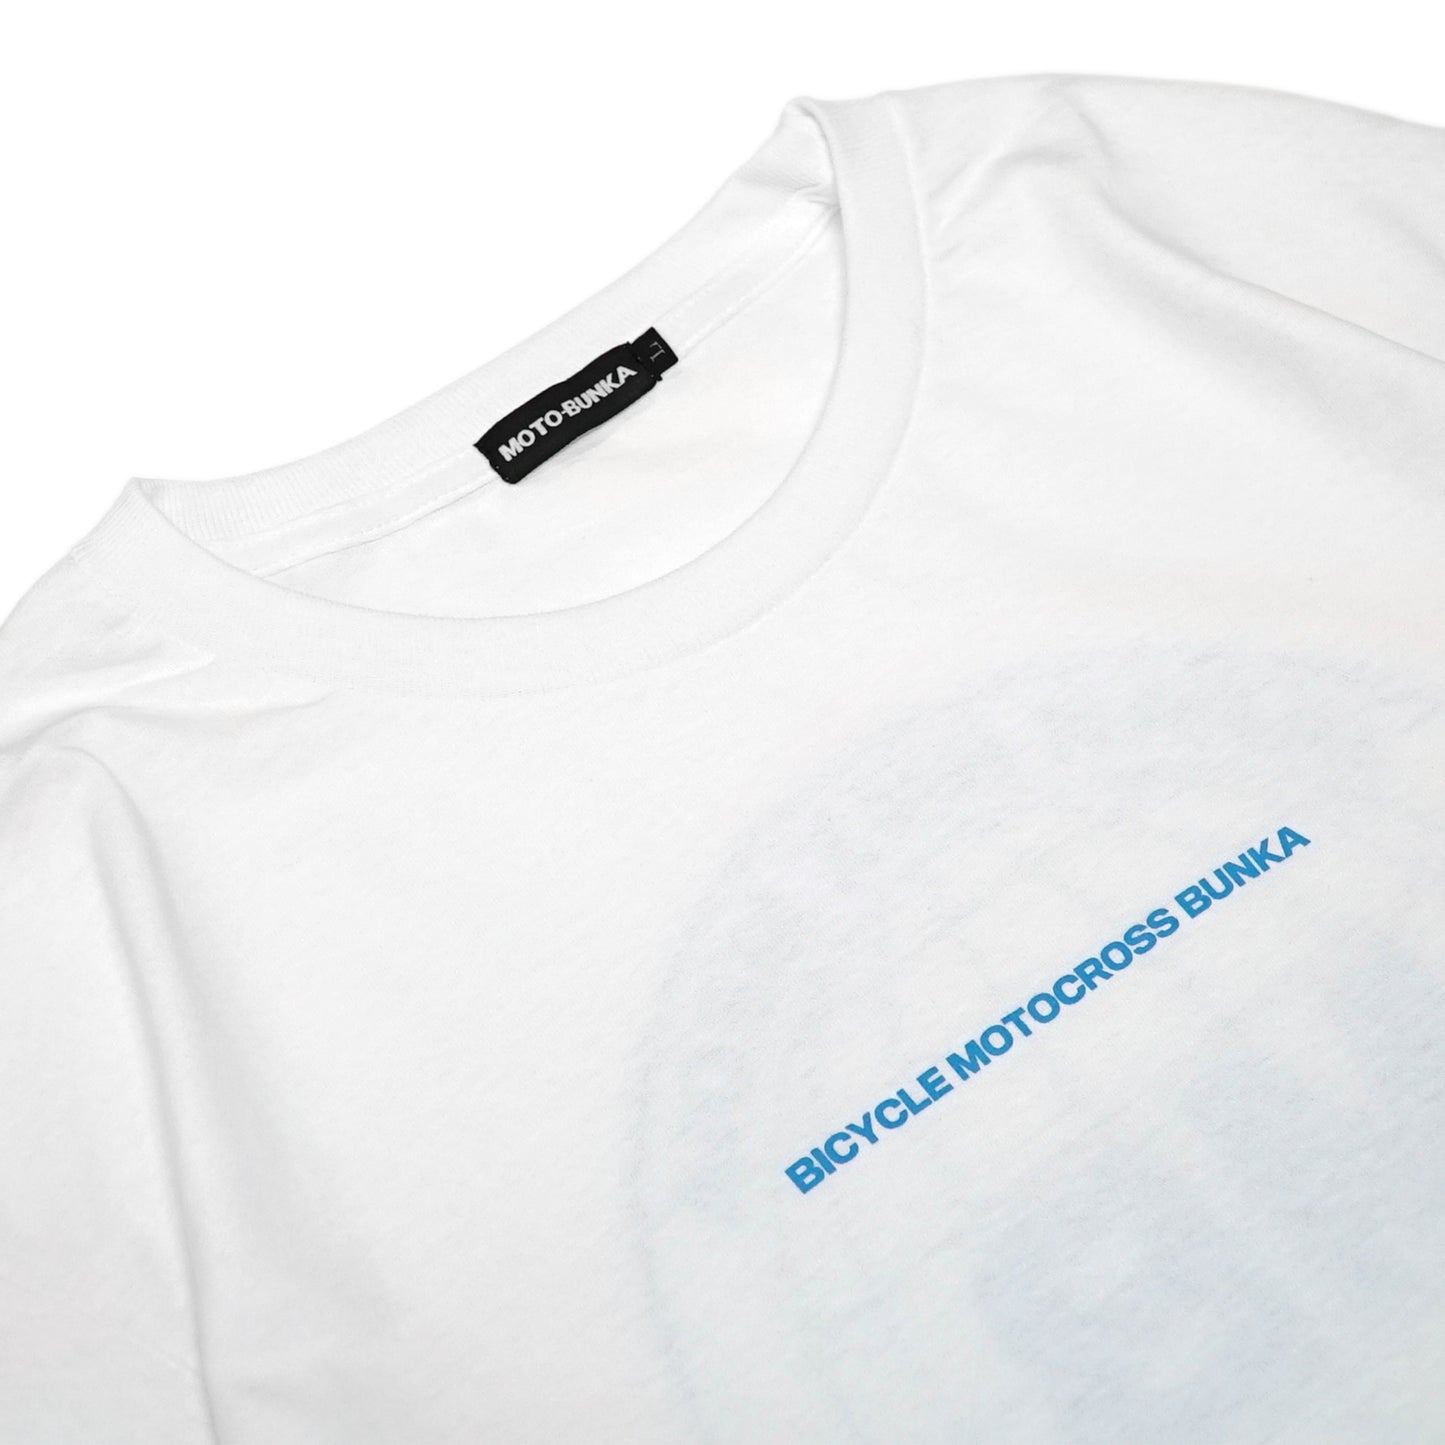 MOTO-BUNKA - JBM LS T-Shirt/White-Light Blue